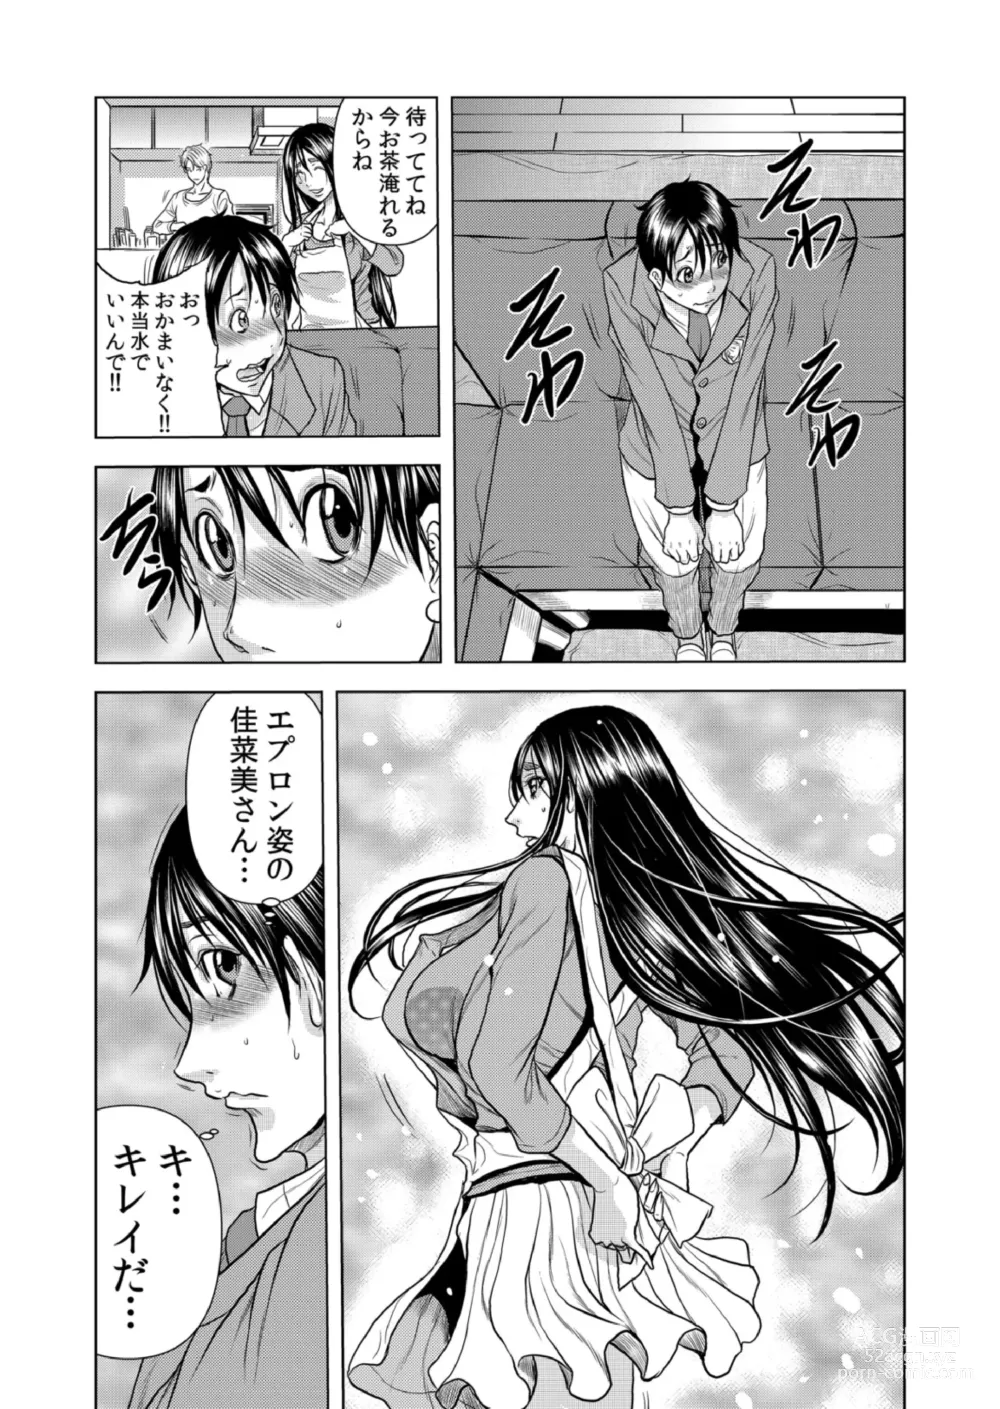 Page 5 of manga Mamasan,yobai ha OK desuka? VOL9